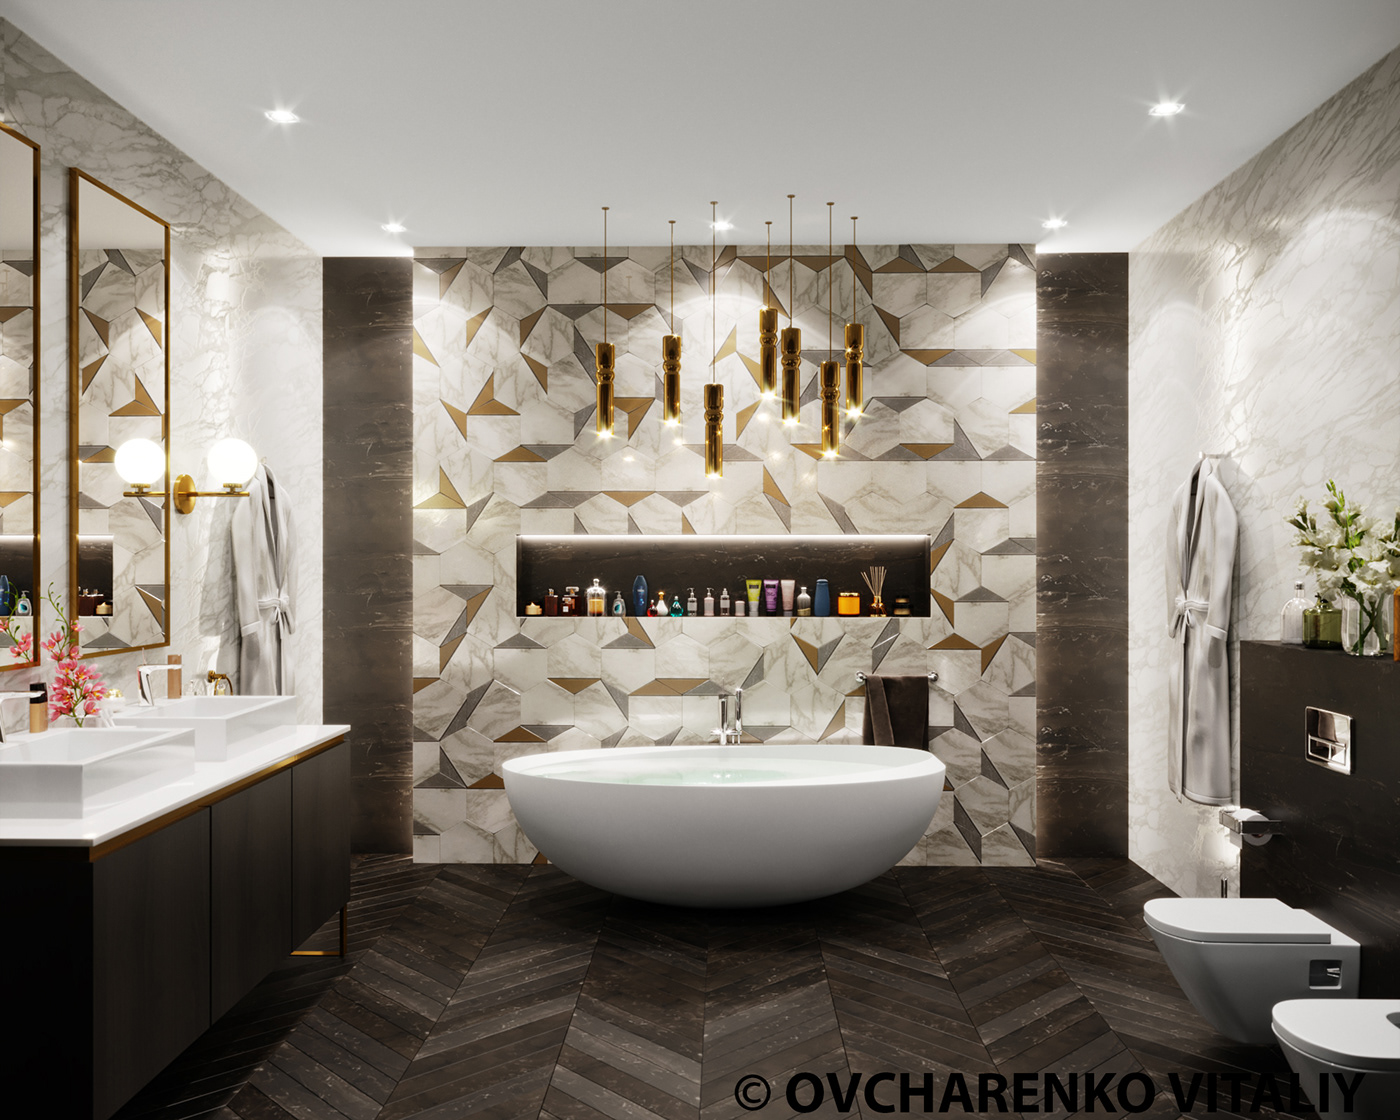 apartment bedroom corona renderer Classic modern house kiev 3ds max Interior interior design 